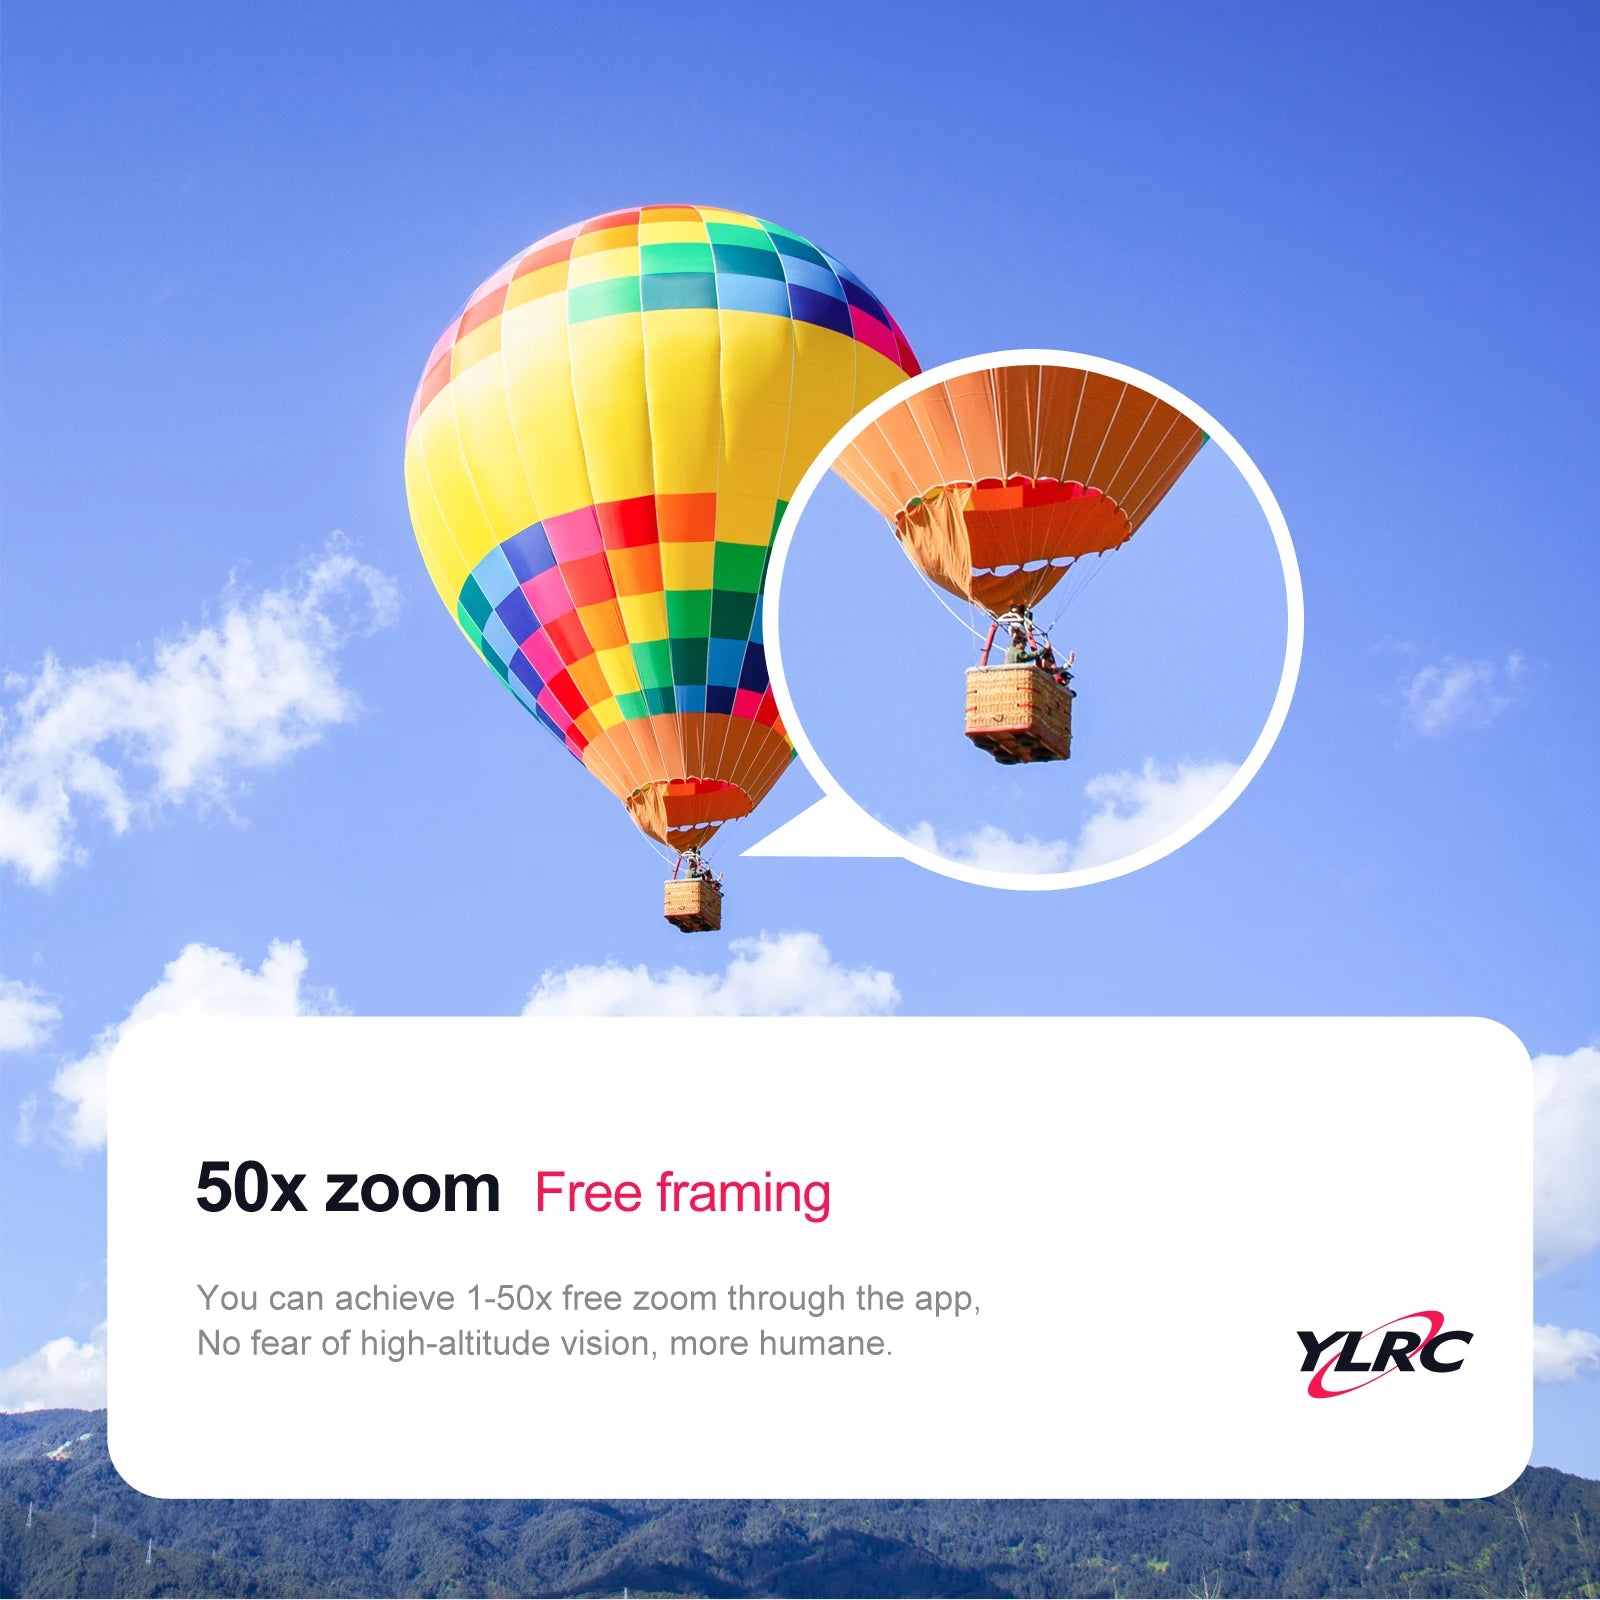 S135 Drone, YLRC allows you to achieve 1-50x free zoom through the app . 